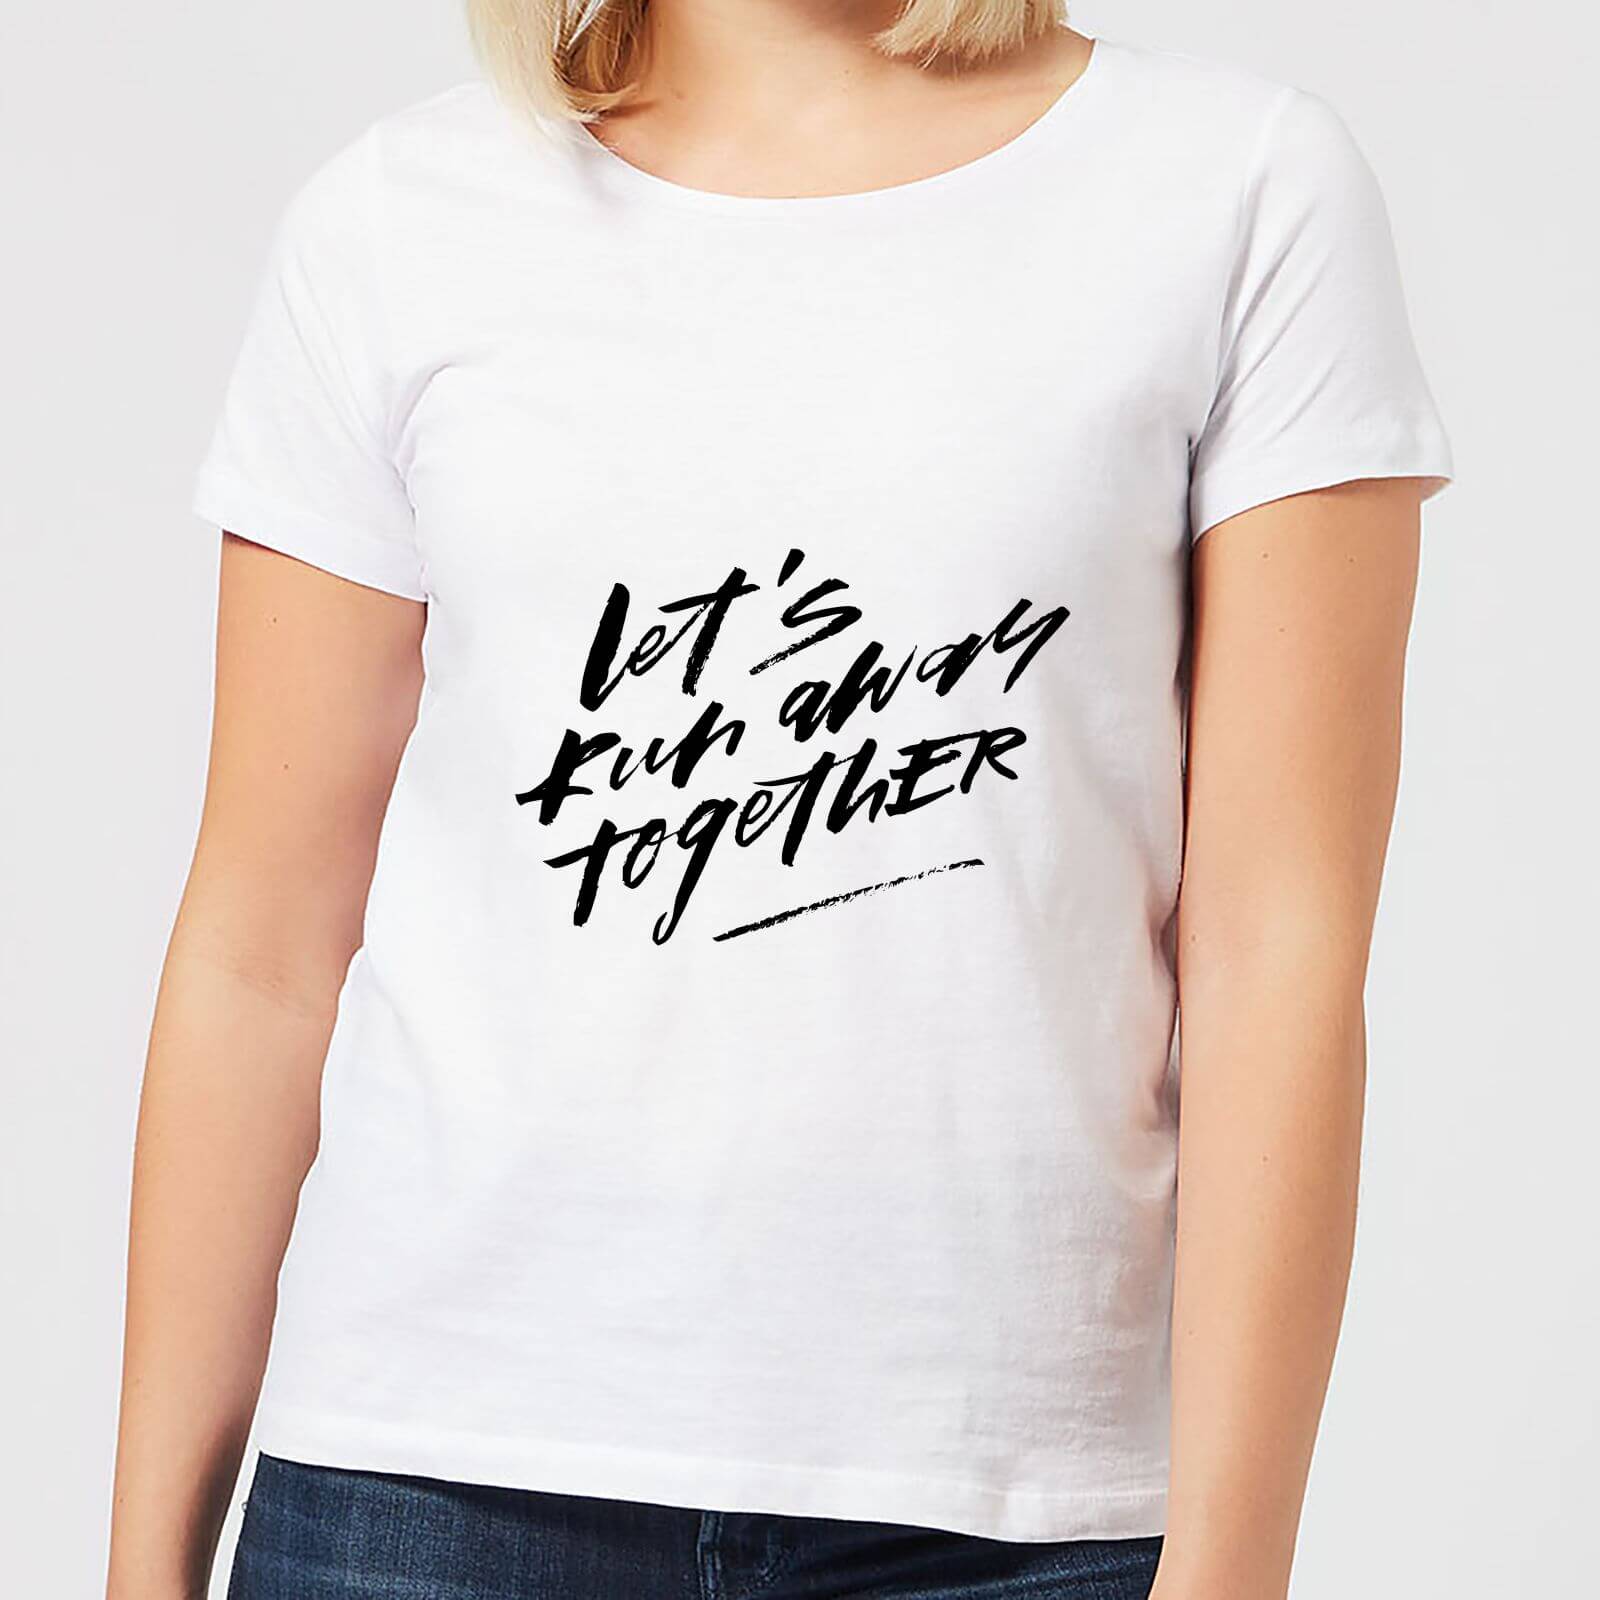 Let' Run Away Together Women's T-Shirt - White - XXL - White